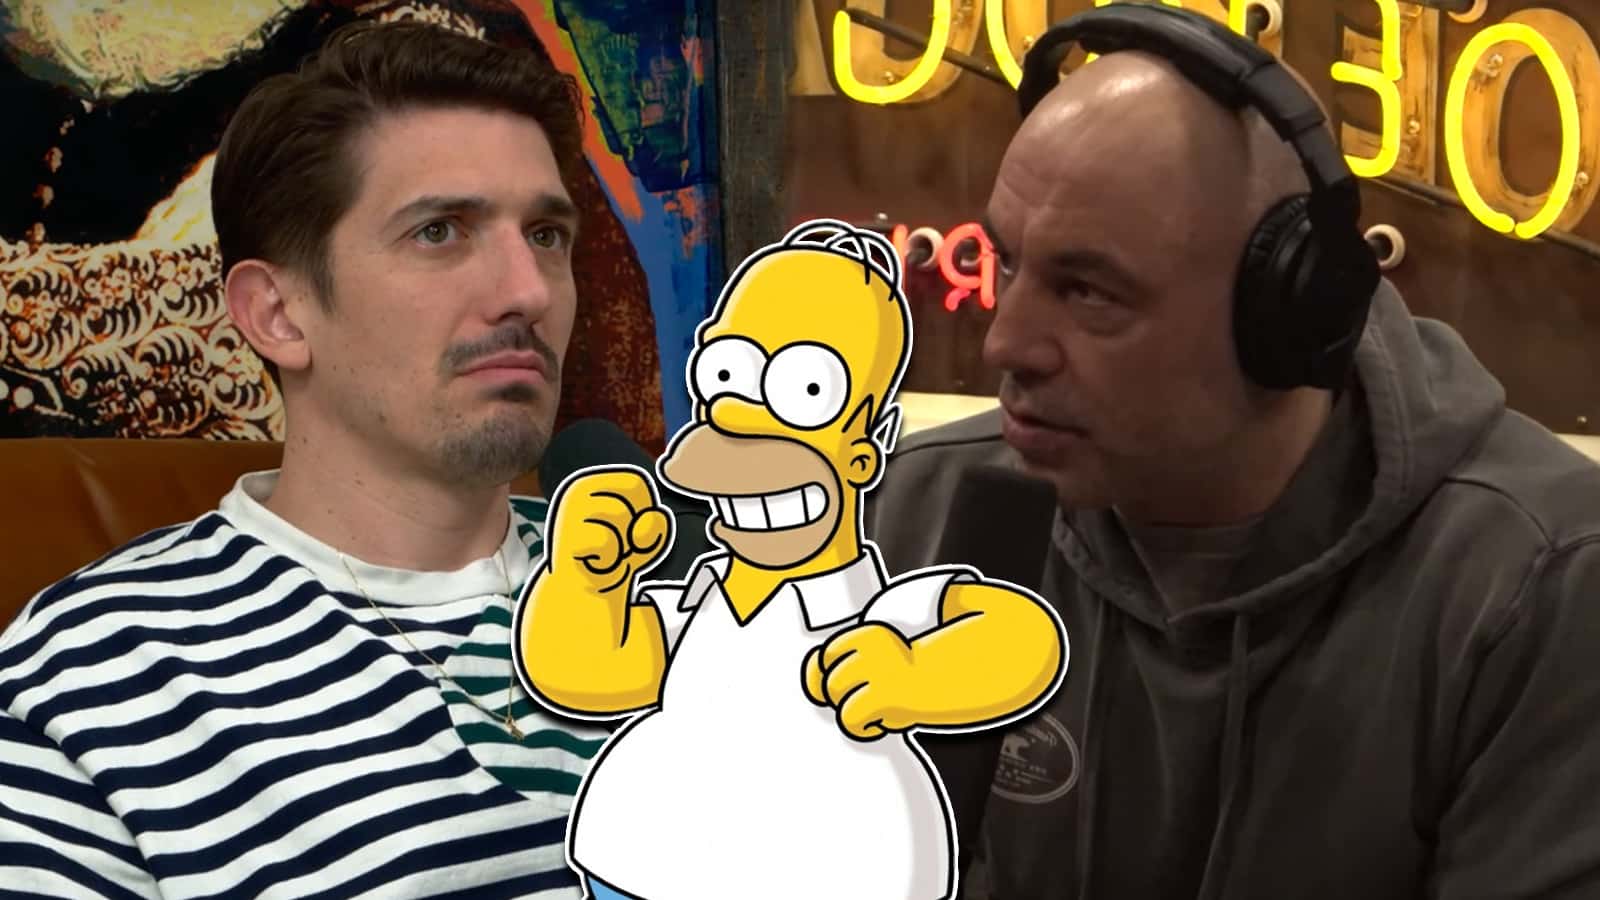 Comedian Andrew Schulz next Homer Simpsons and Spotify Podcaster Joe Rogan screenshot.